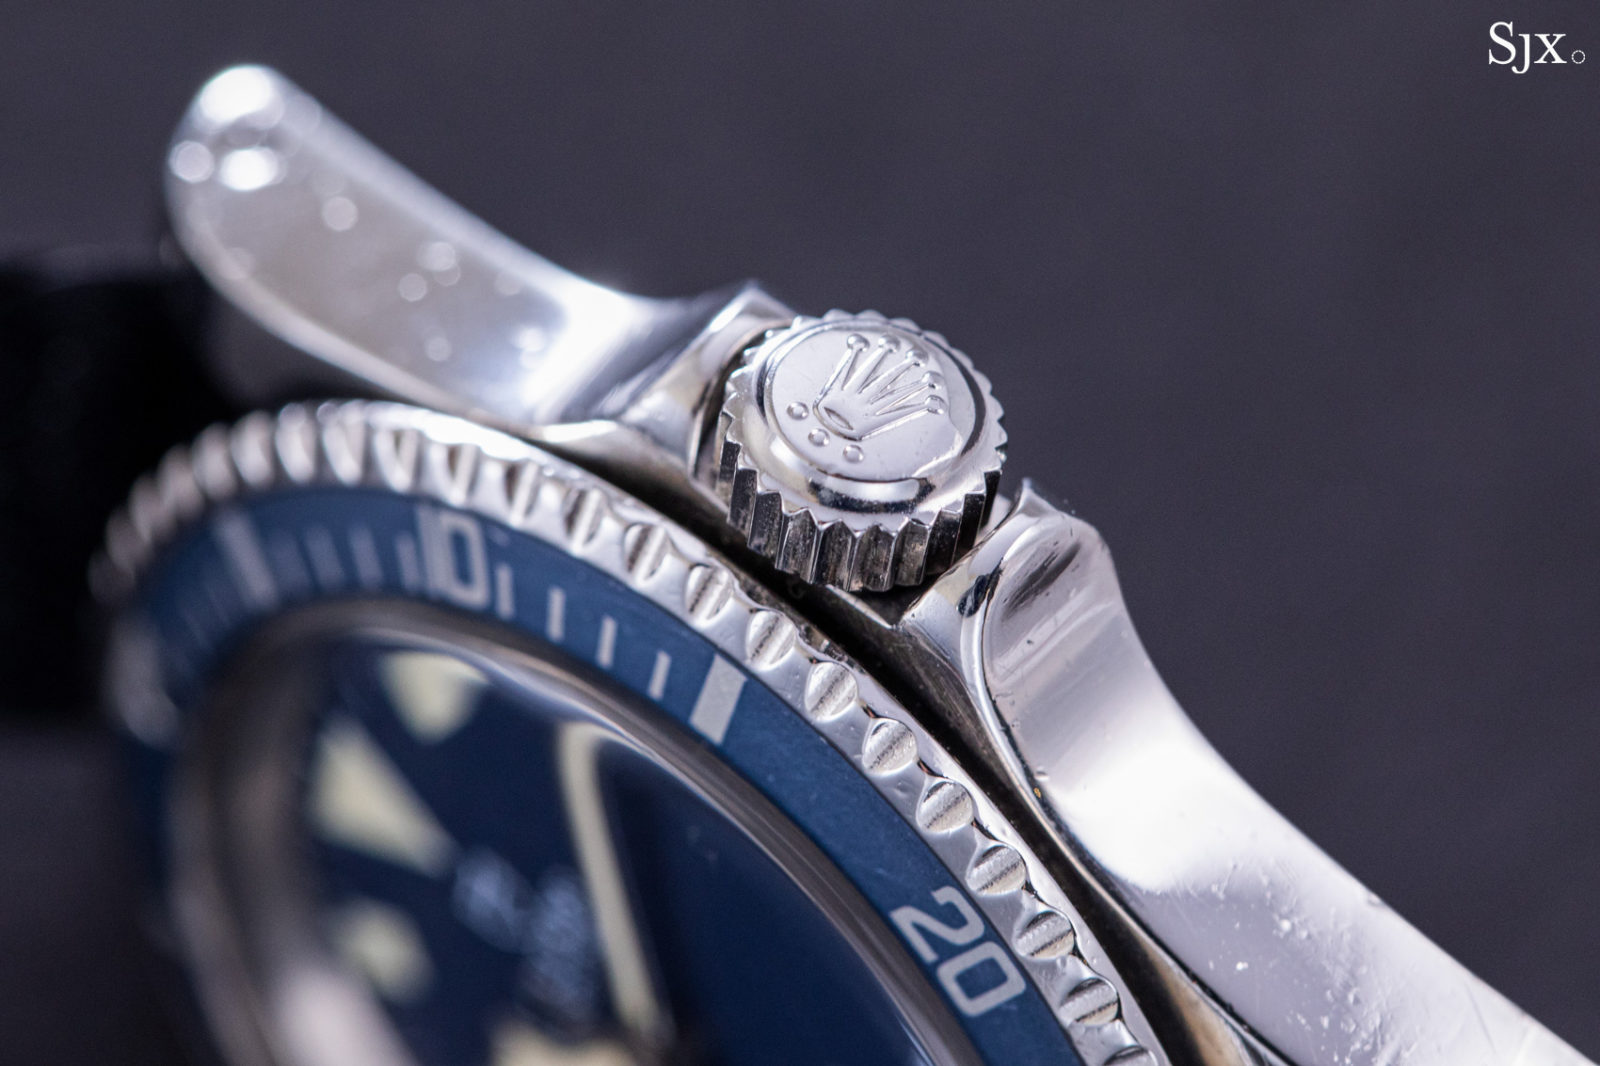 Exhibition: Vintage Tudor Dive Watches in Singapore | SJX Watches